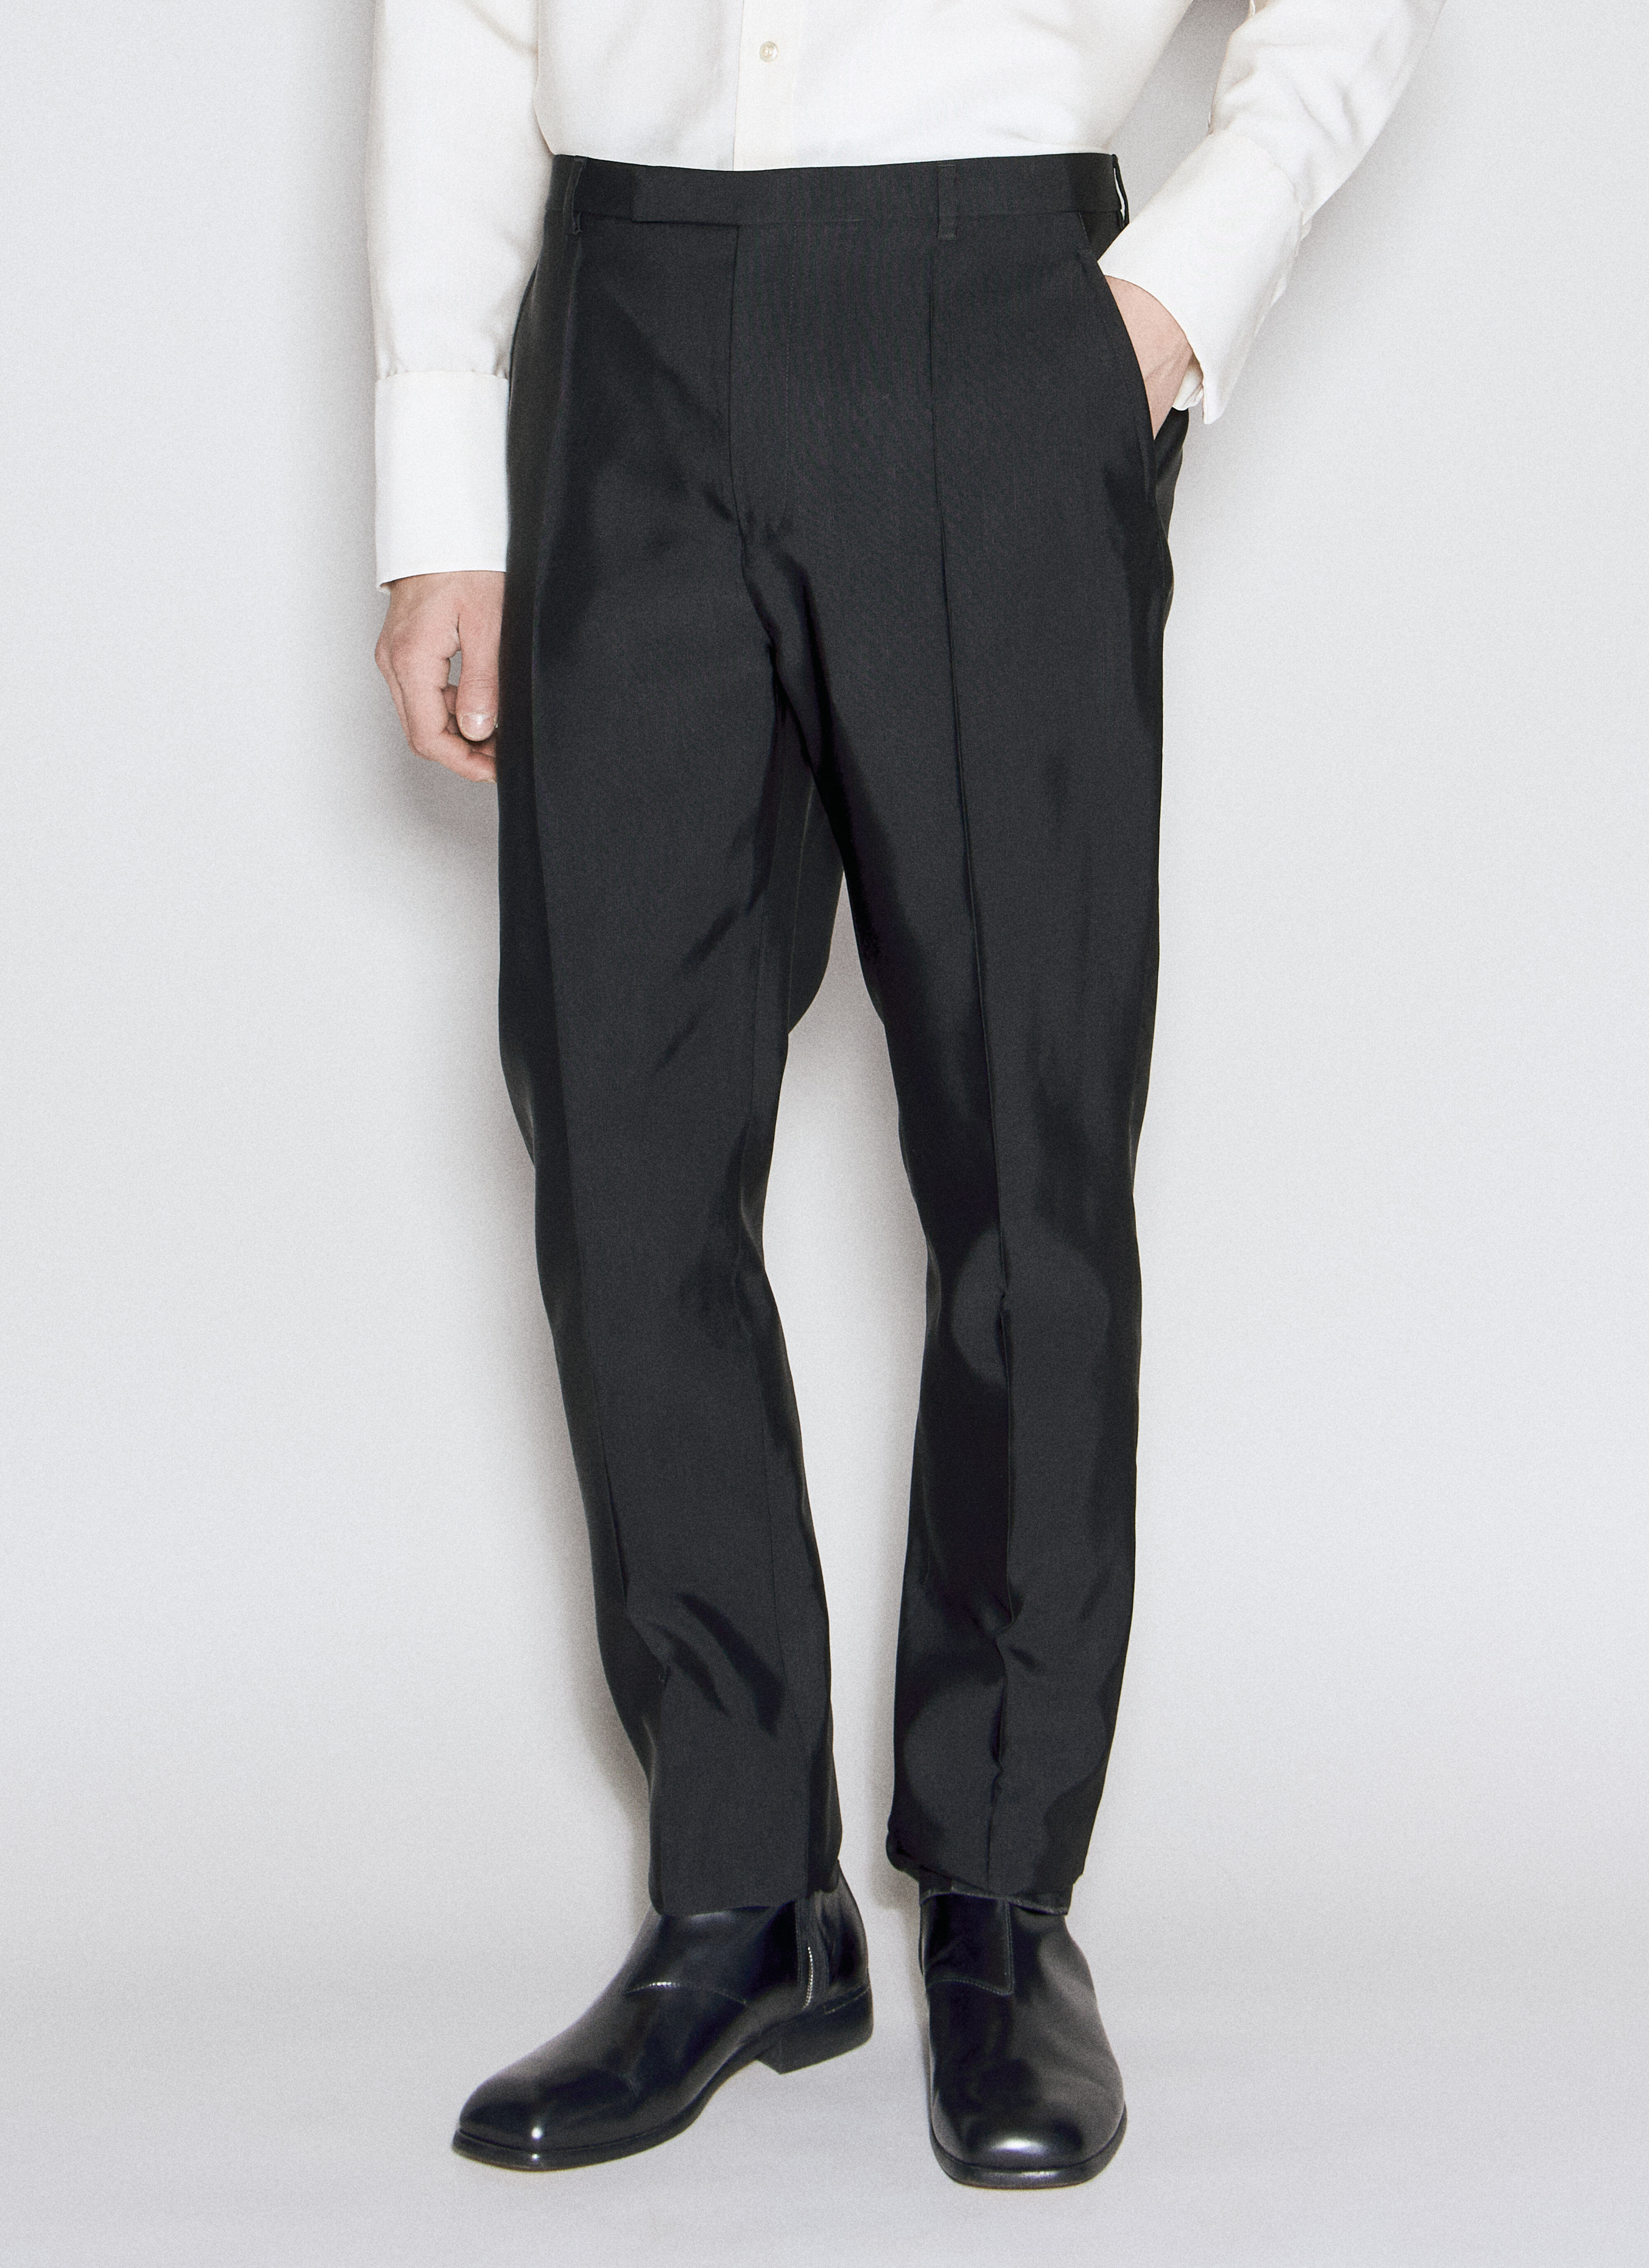 Saint Laurent High-Waisted Faille Pants Black sla0156007